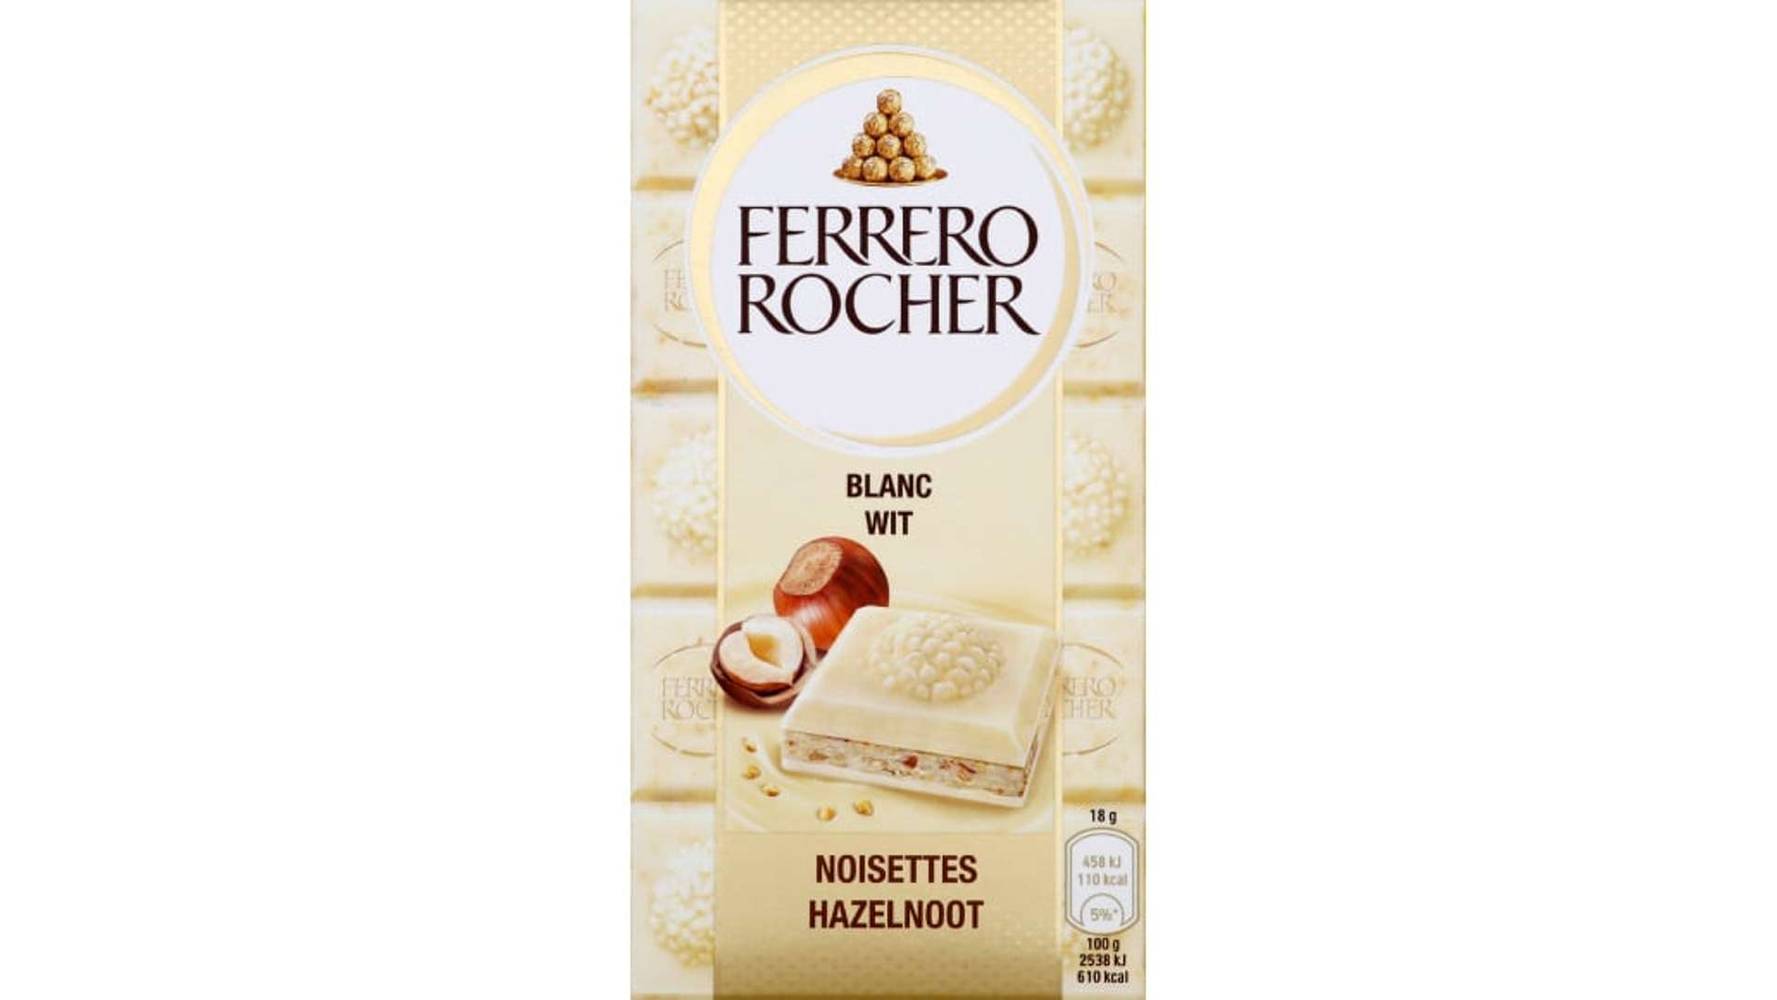 ROCHER Ferrero rocher tablette chocolat blanc noisettes La tablette de 90g